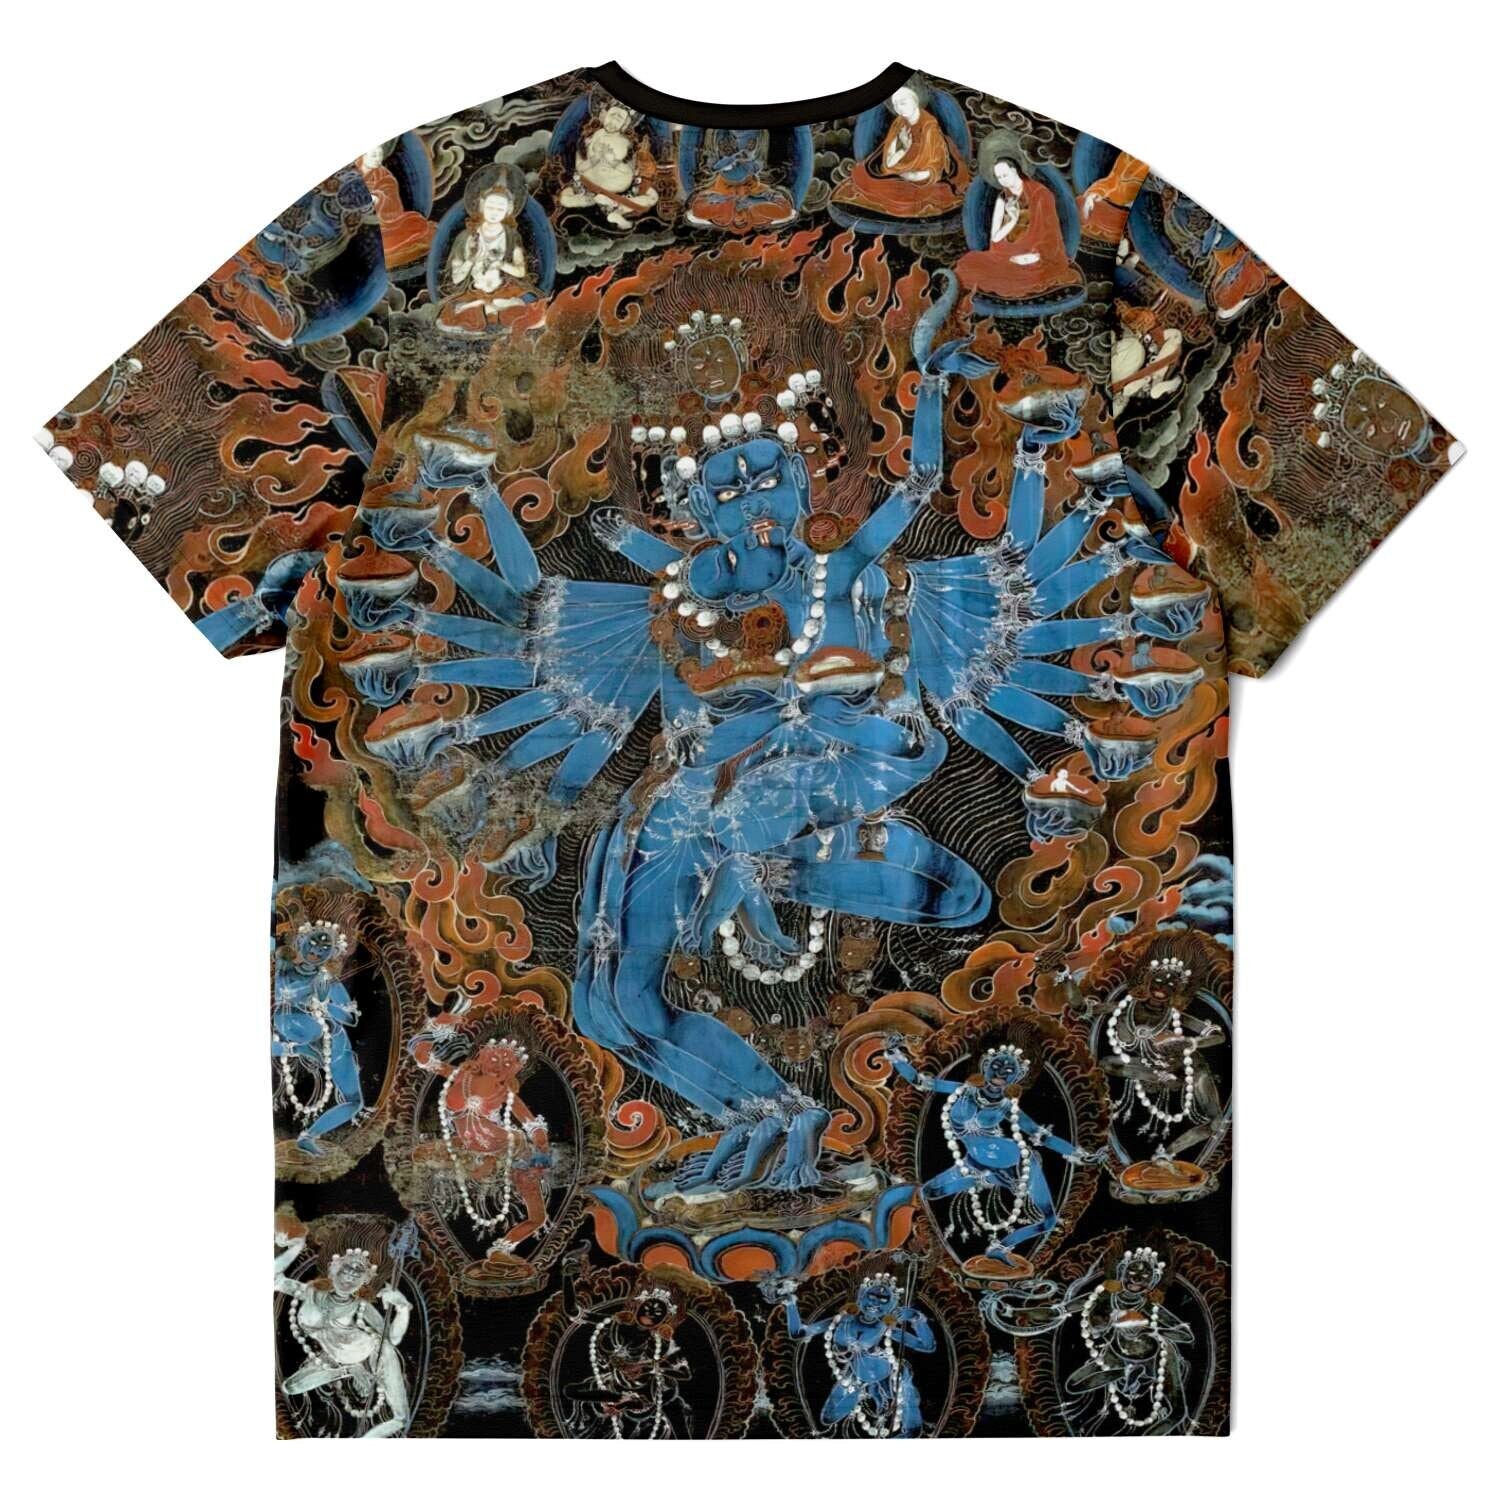 AOP T-Shirt Hevajra: Protective Deity of Compassion and Wisdom, Tibetan Thangka Vintage Antique Buddhist Graphic Art T-Shirt Tee